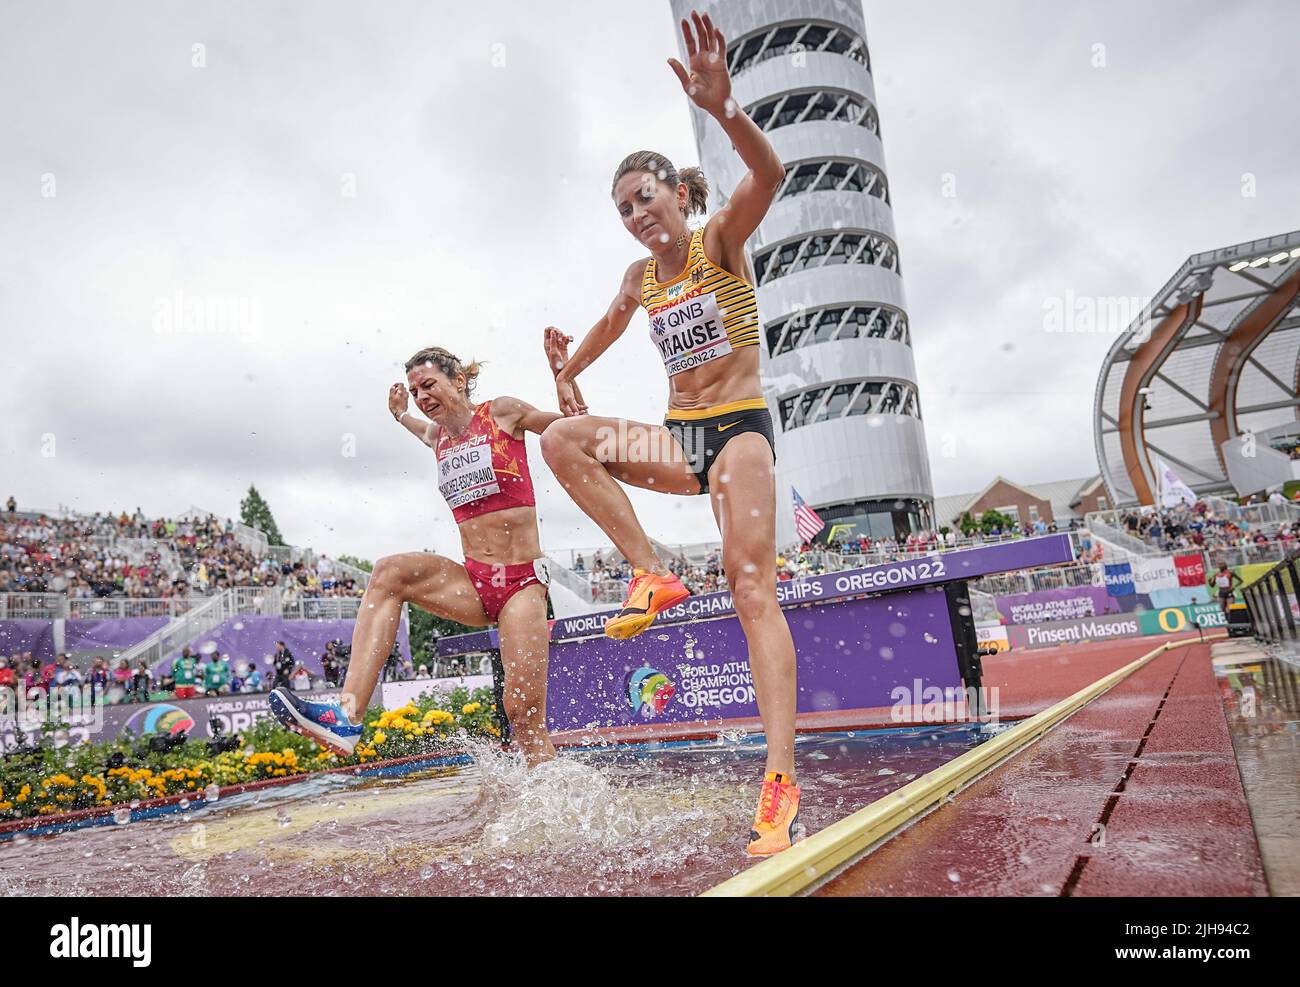 Gesa Krause smashes 2,000 m Steeplechase world best at Berlin's ISTAF -  Athletics Illustrated